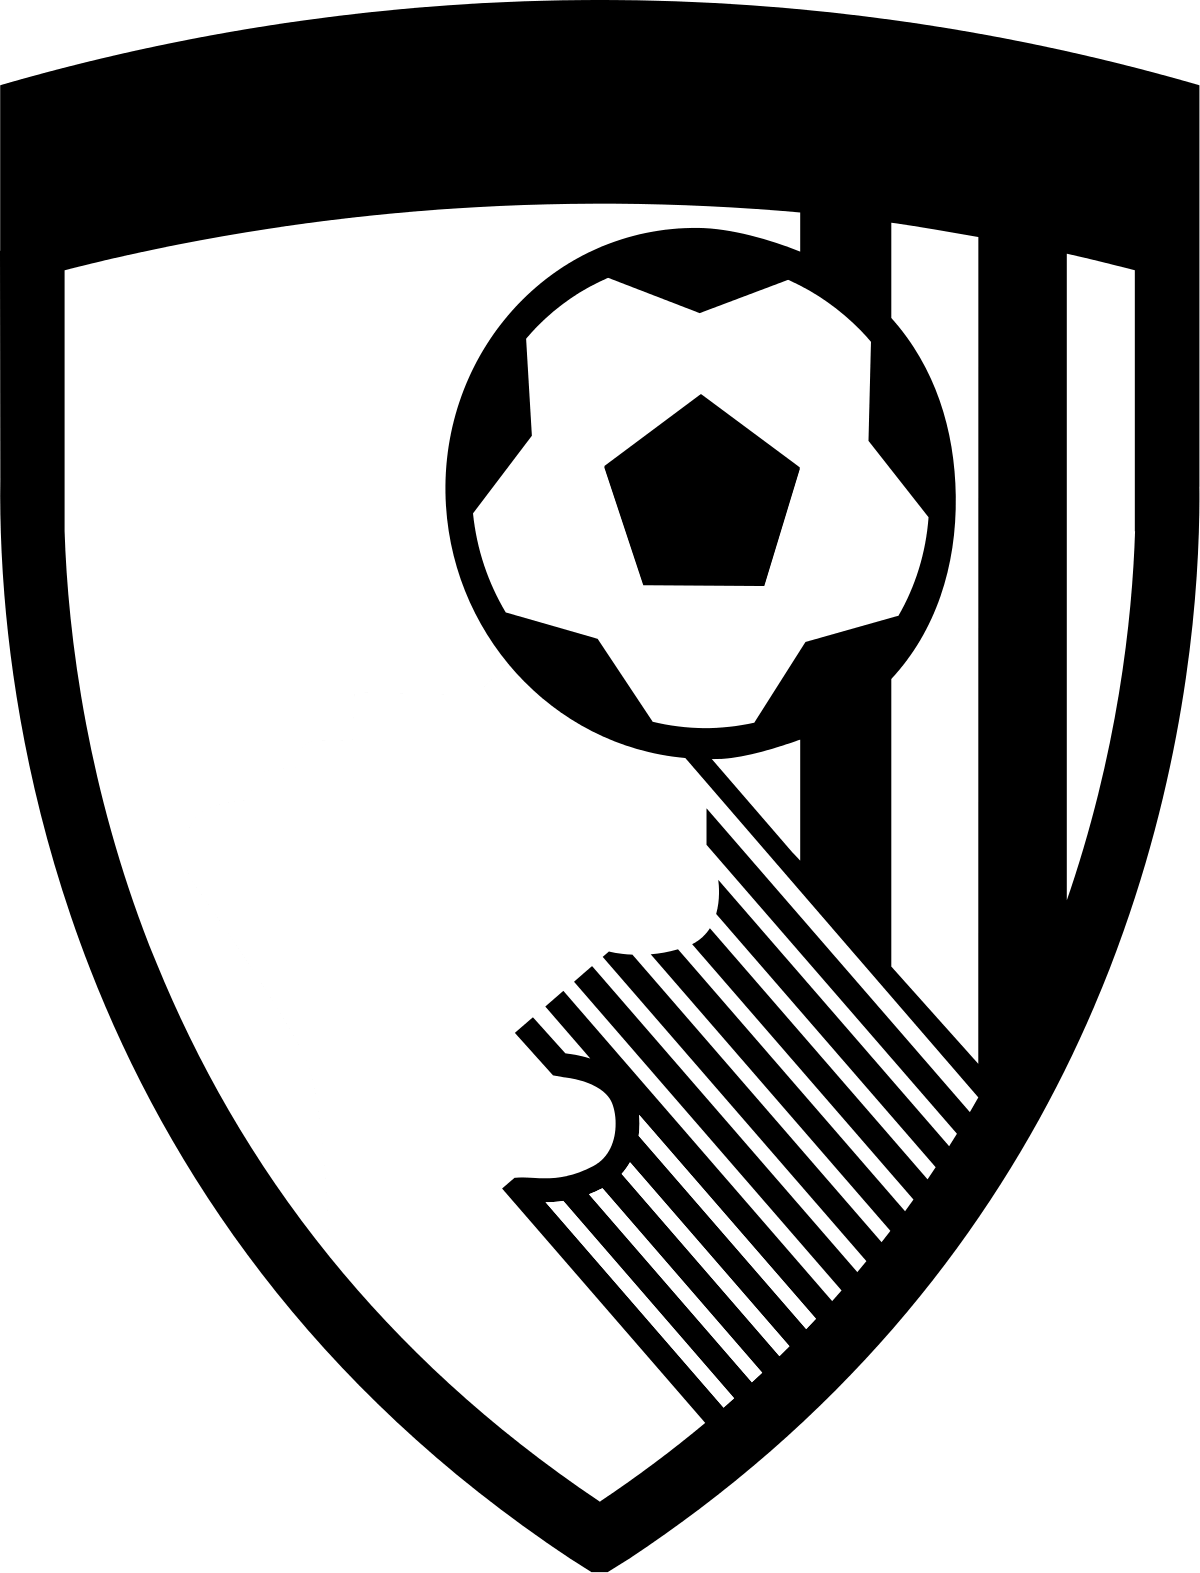 Black and White Football Logo - A.F.C. Bournemouth